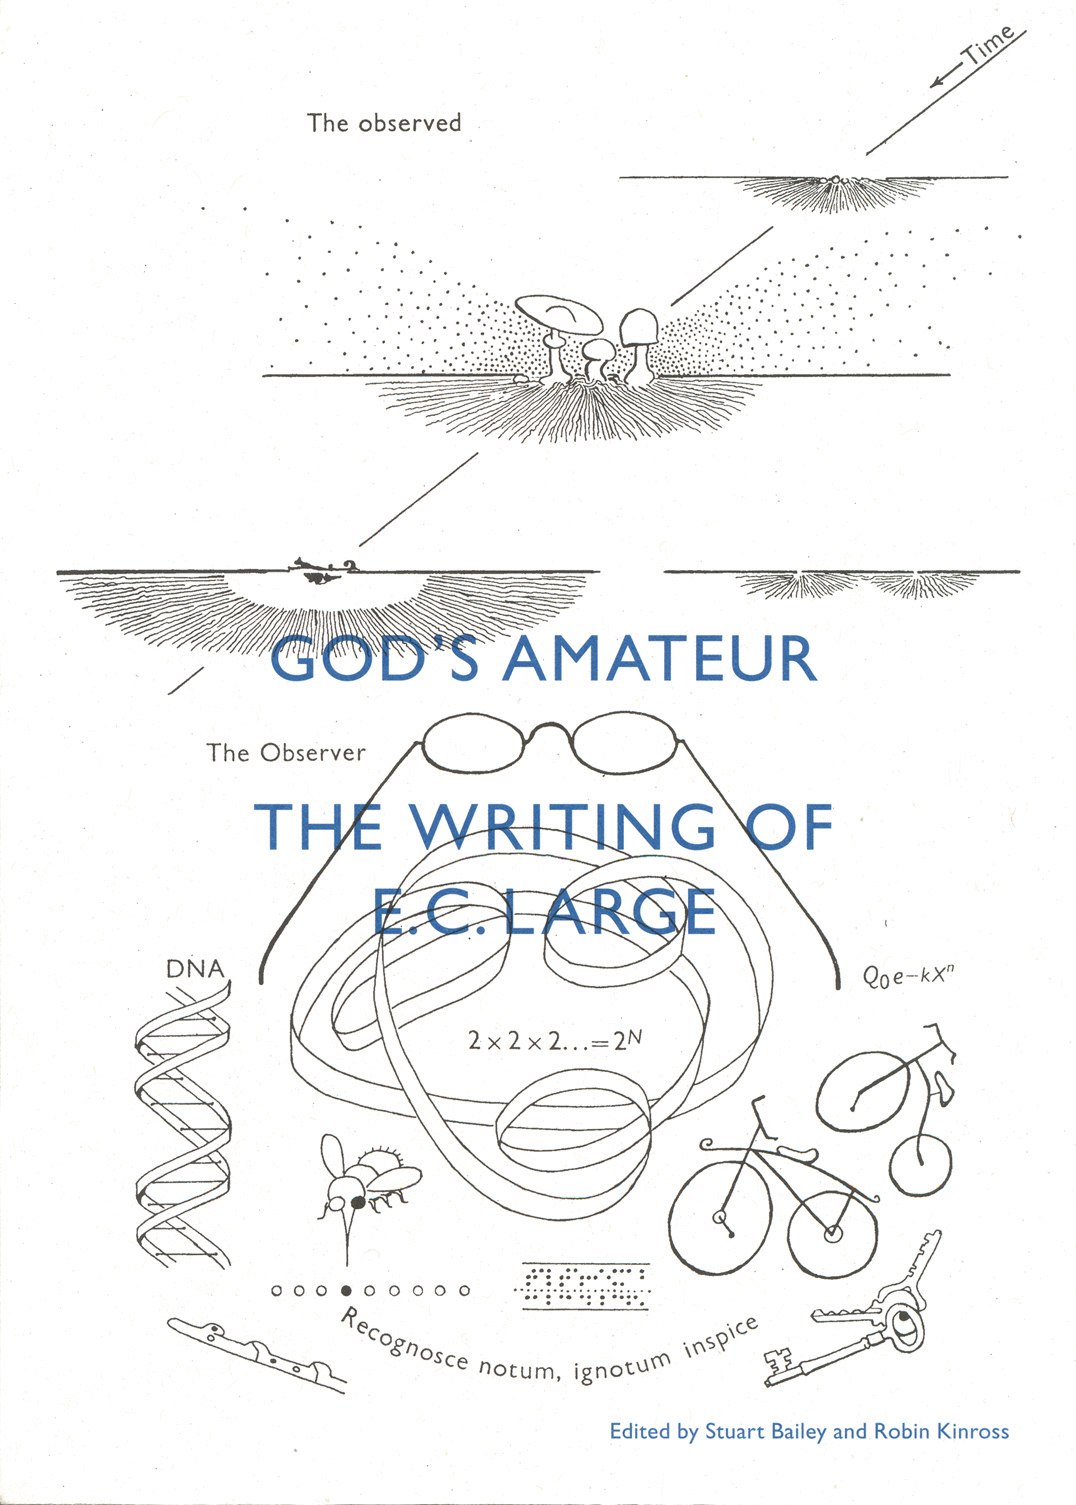 God’s amateur: the writing of E.C. Large